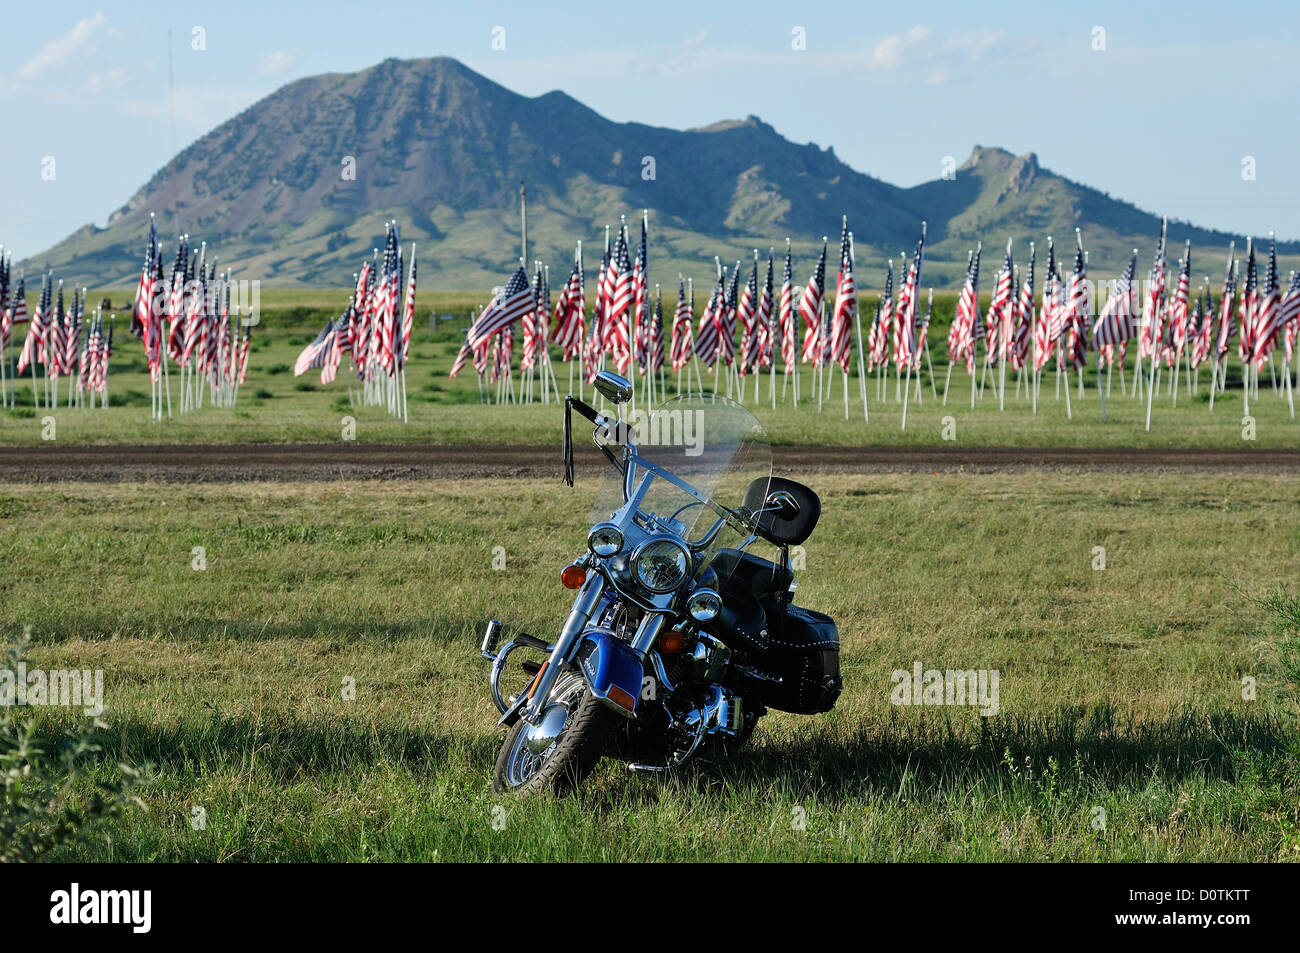 Bandierine americane, bandiere, Harley, Harley Davidson, bike, cavallo, libertà, prati, Sturgis, Dakota del Sud, Stati Uniti, Stati Uniti, Ameri Foto Stock